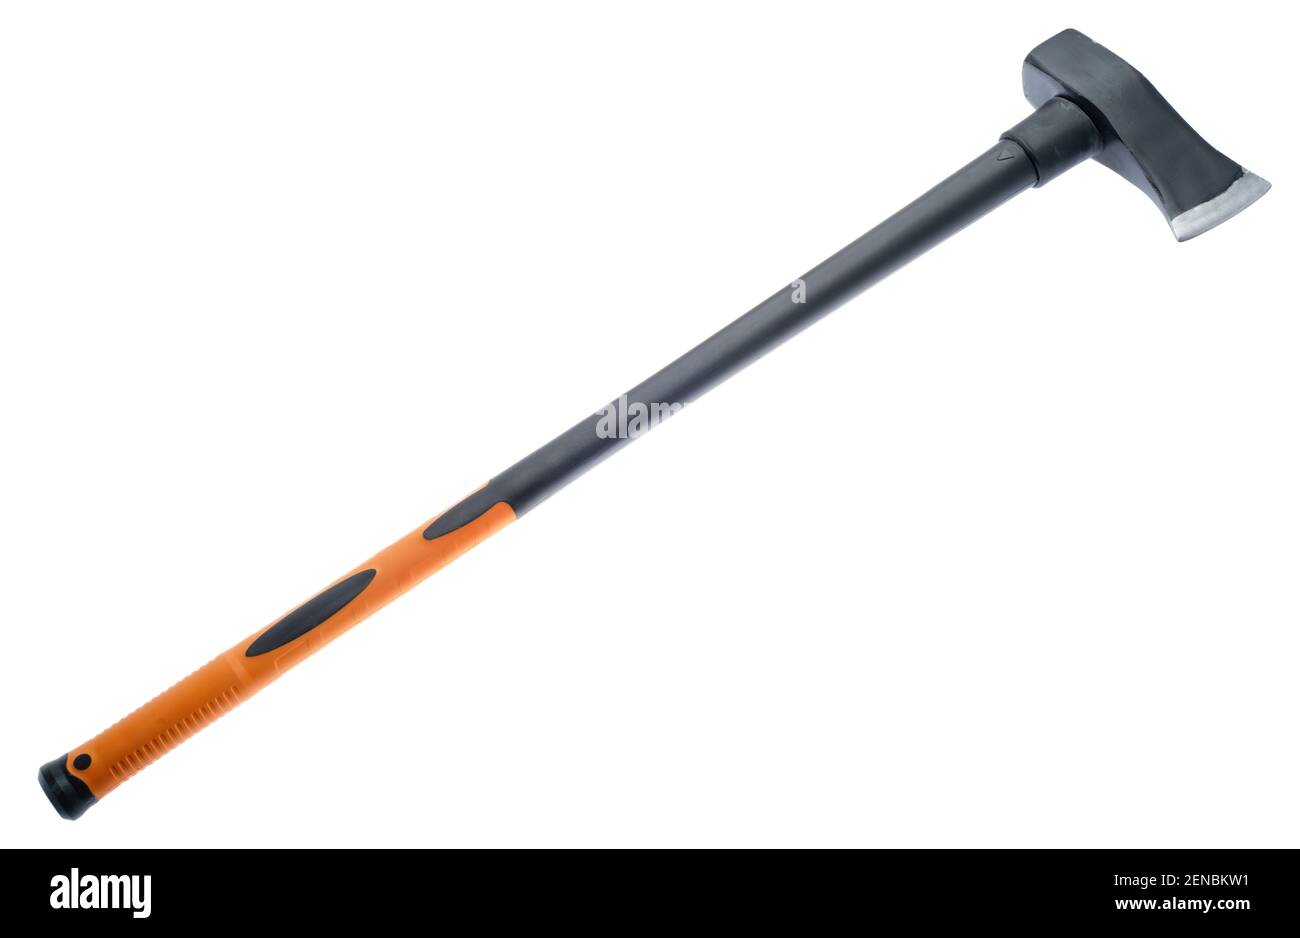 Axe Hammer with long handle. Heavy duty 6 lbs weight axe-hammer. Stock Photo